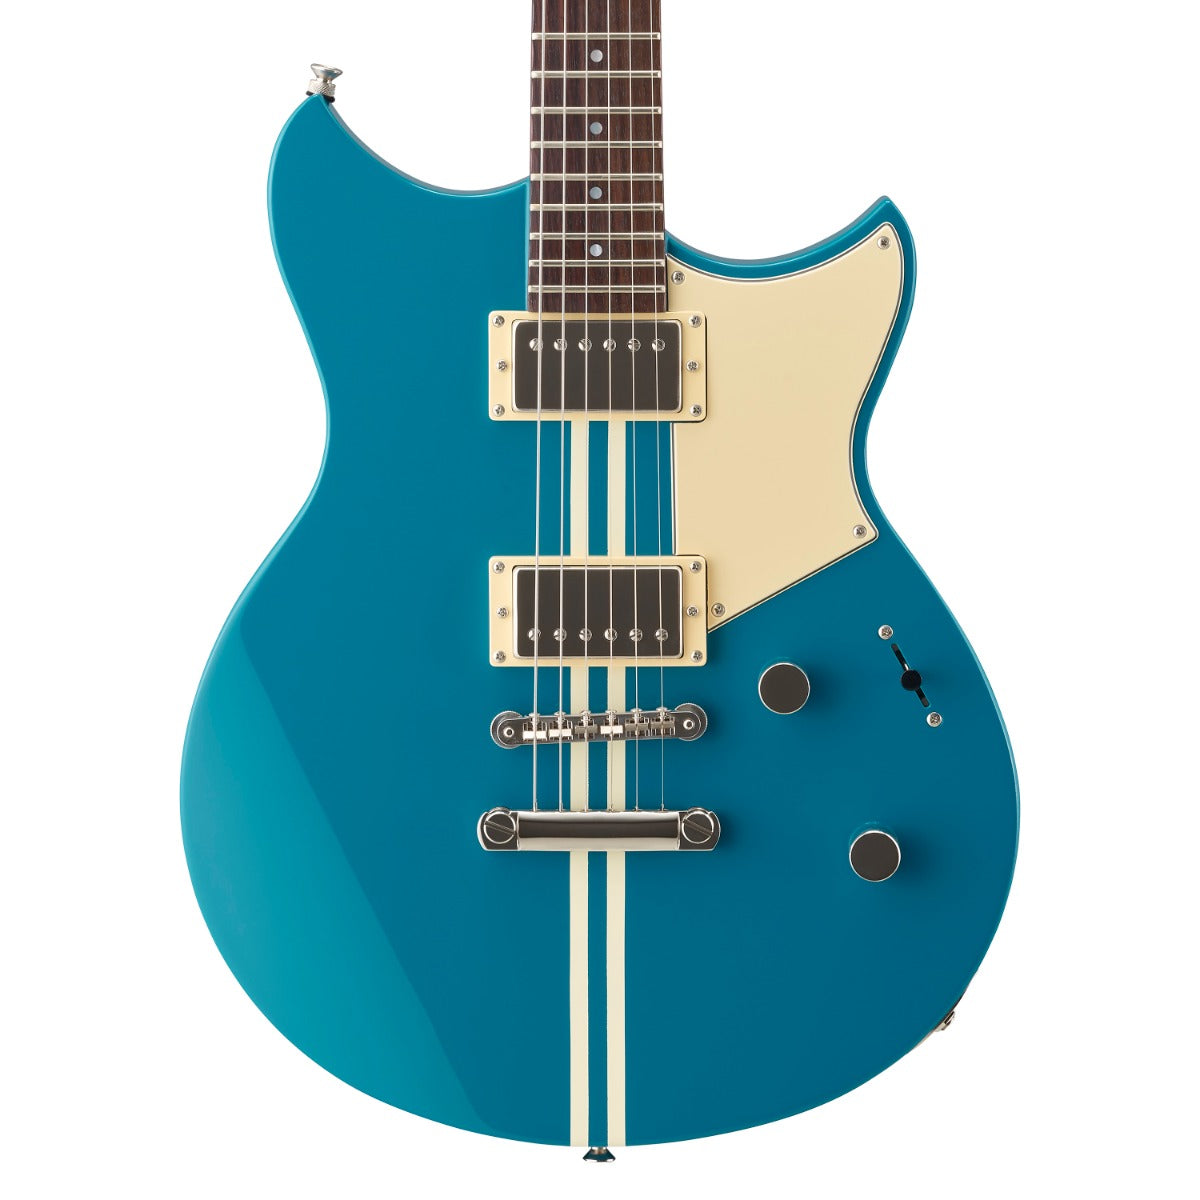 Yamaha RSE20 Revstar Element Electric Guitar - Swift Blue, View 1